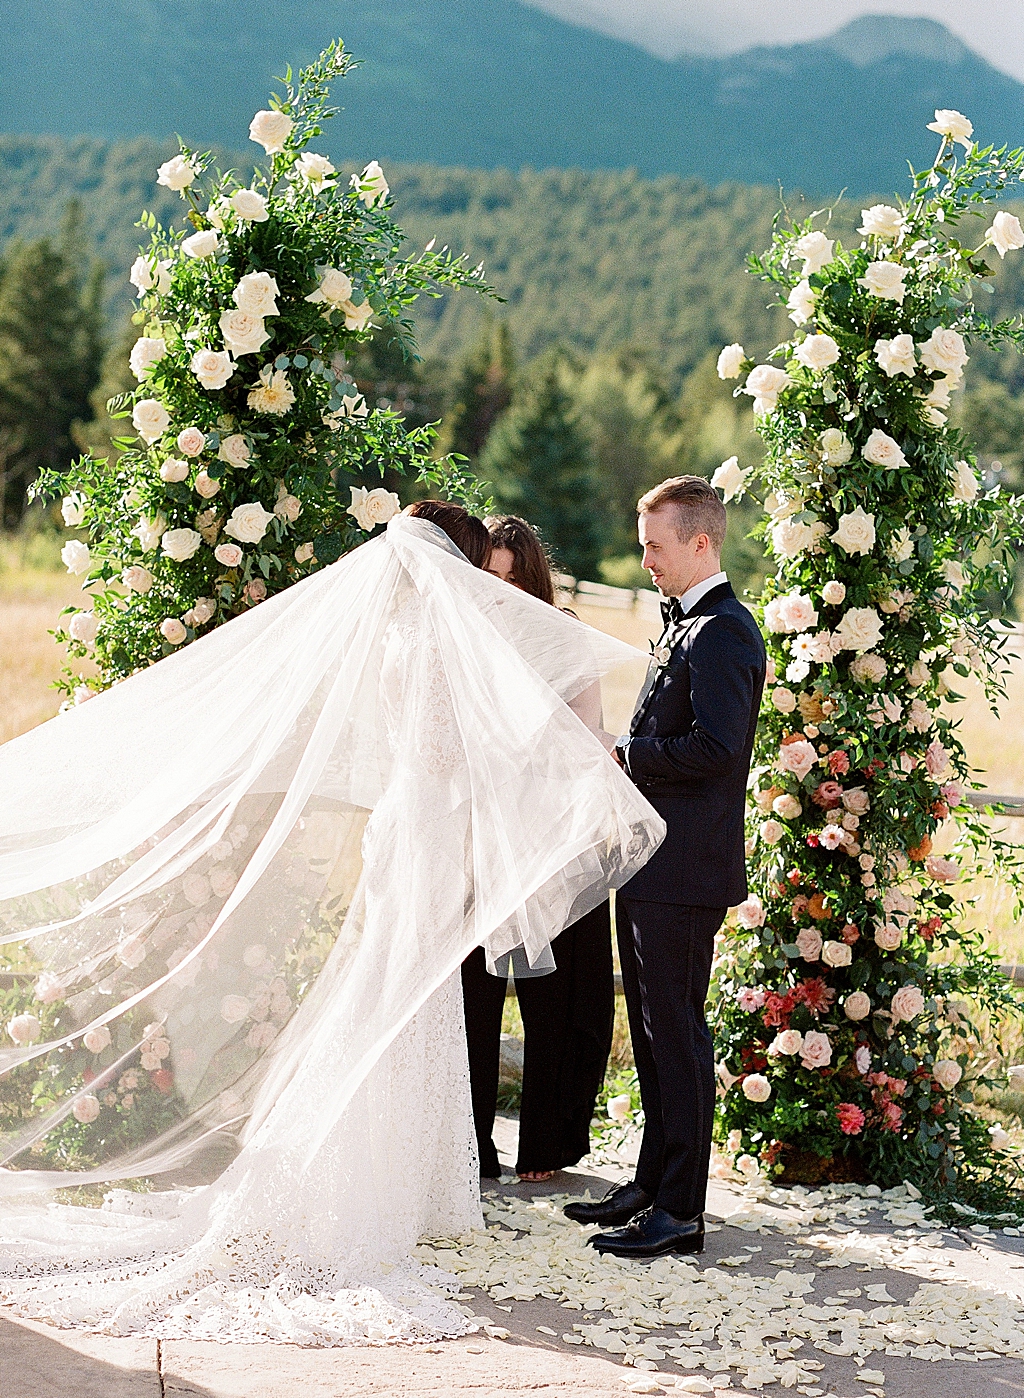 ceremony-monique-lhuillier-long-sleeve-wedding-dress